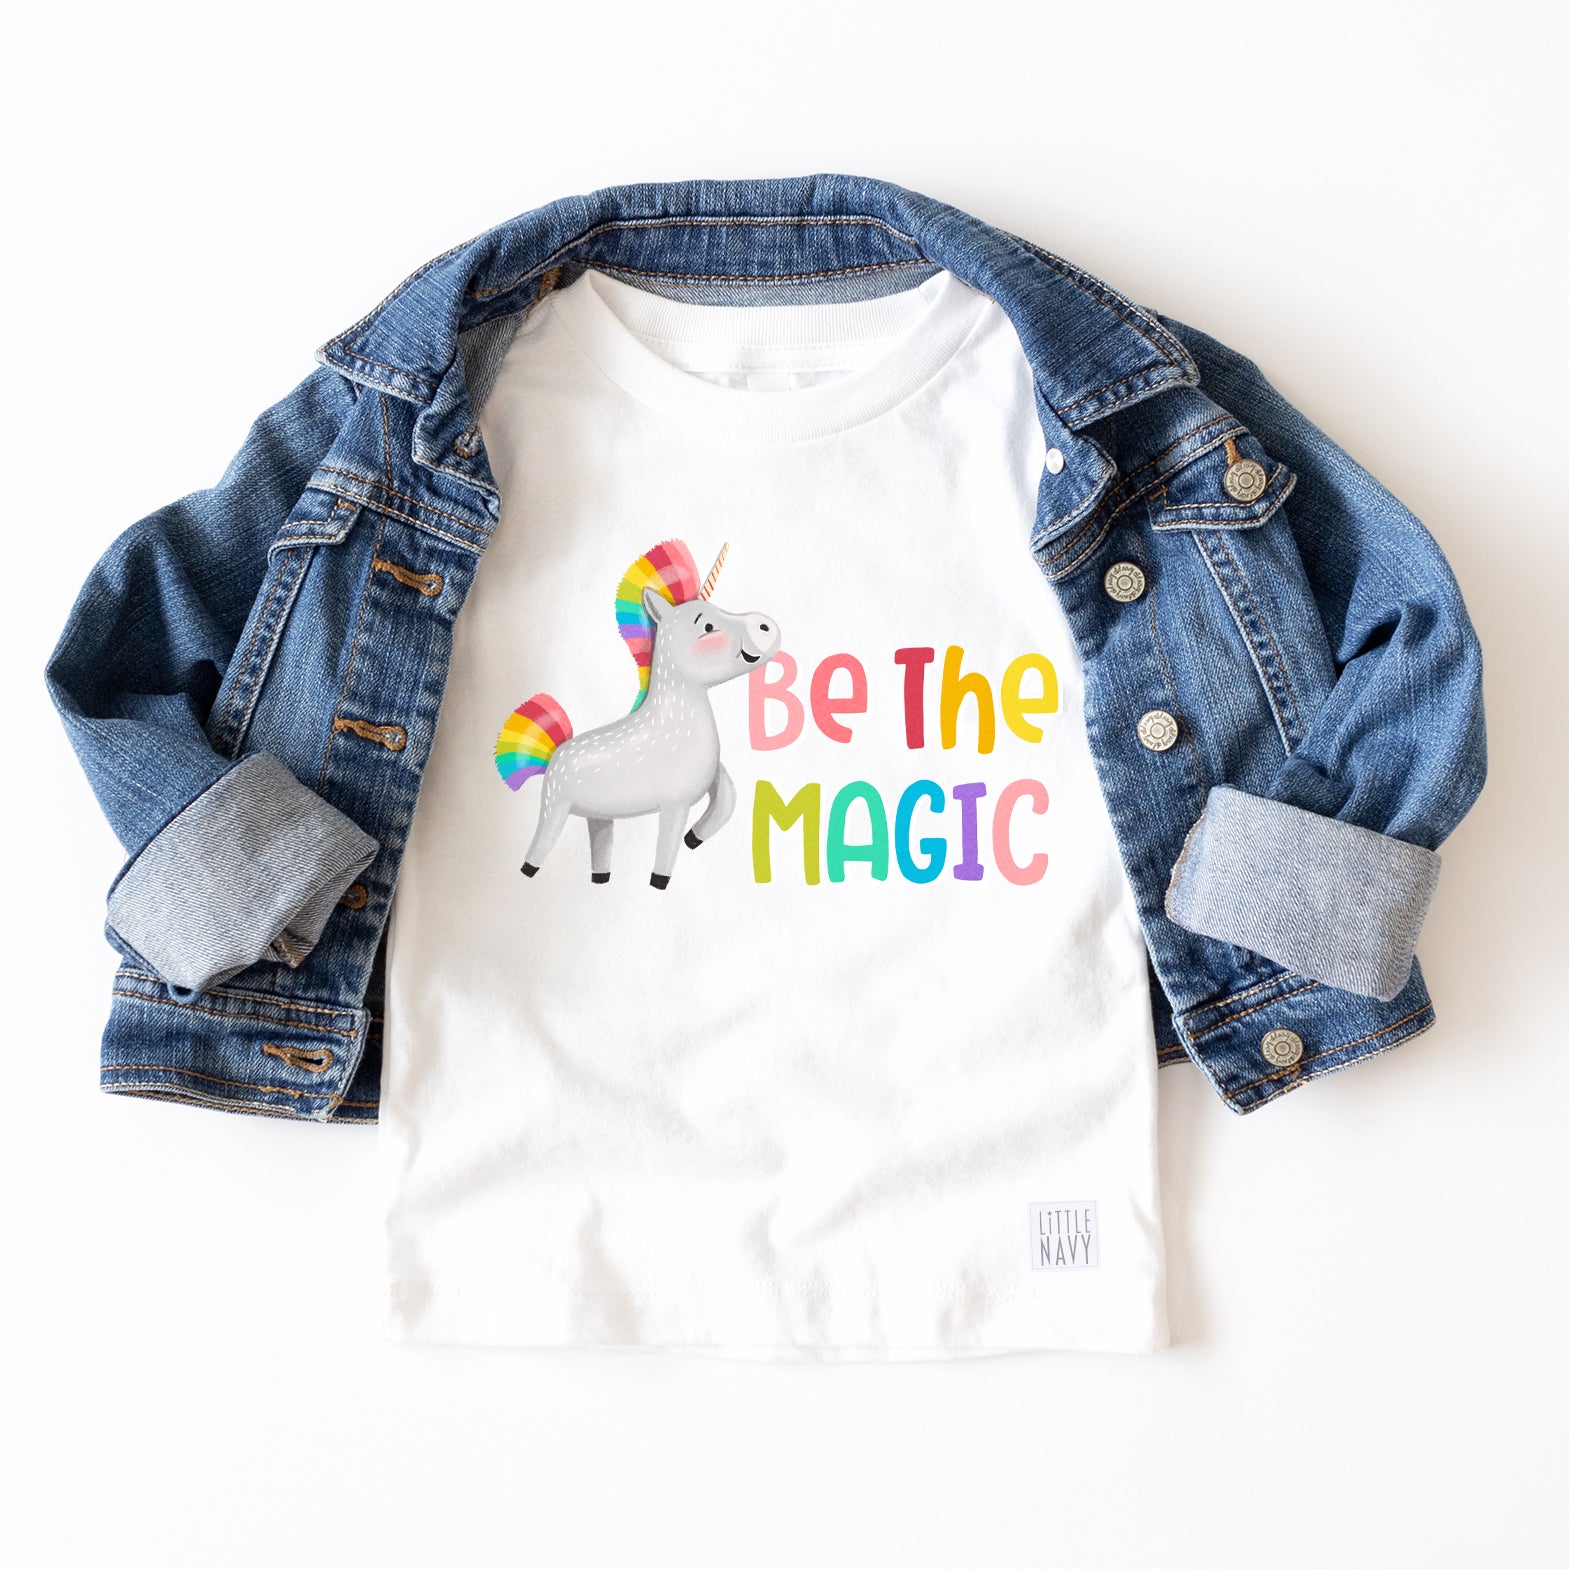 Be the MAGIC T-Shirt